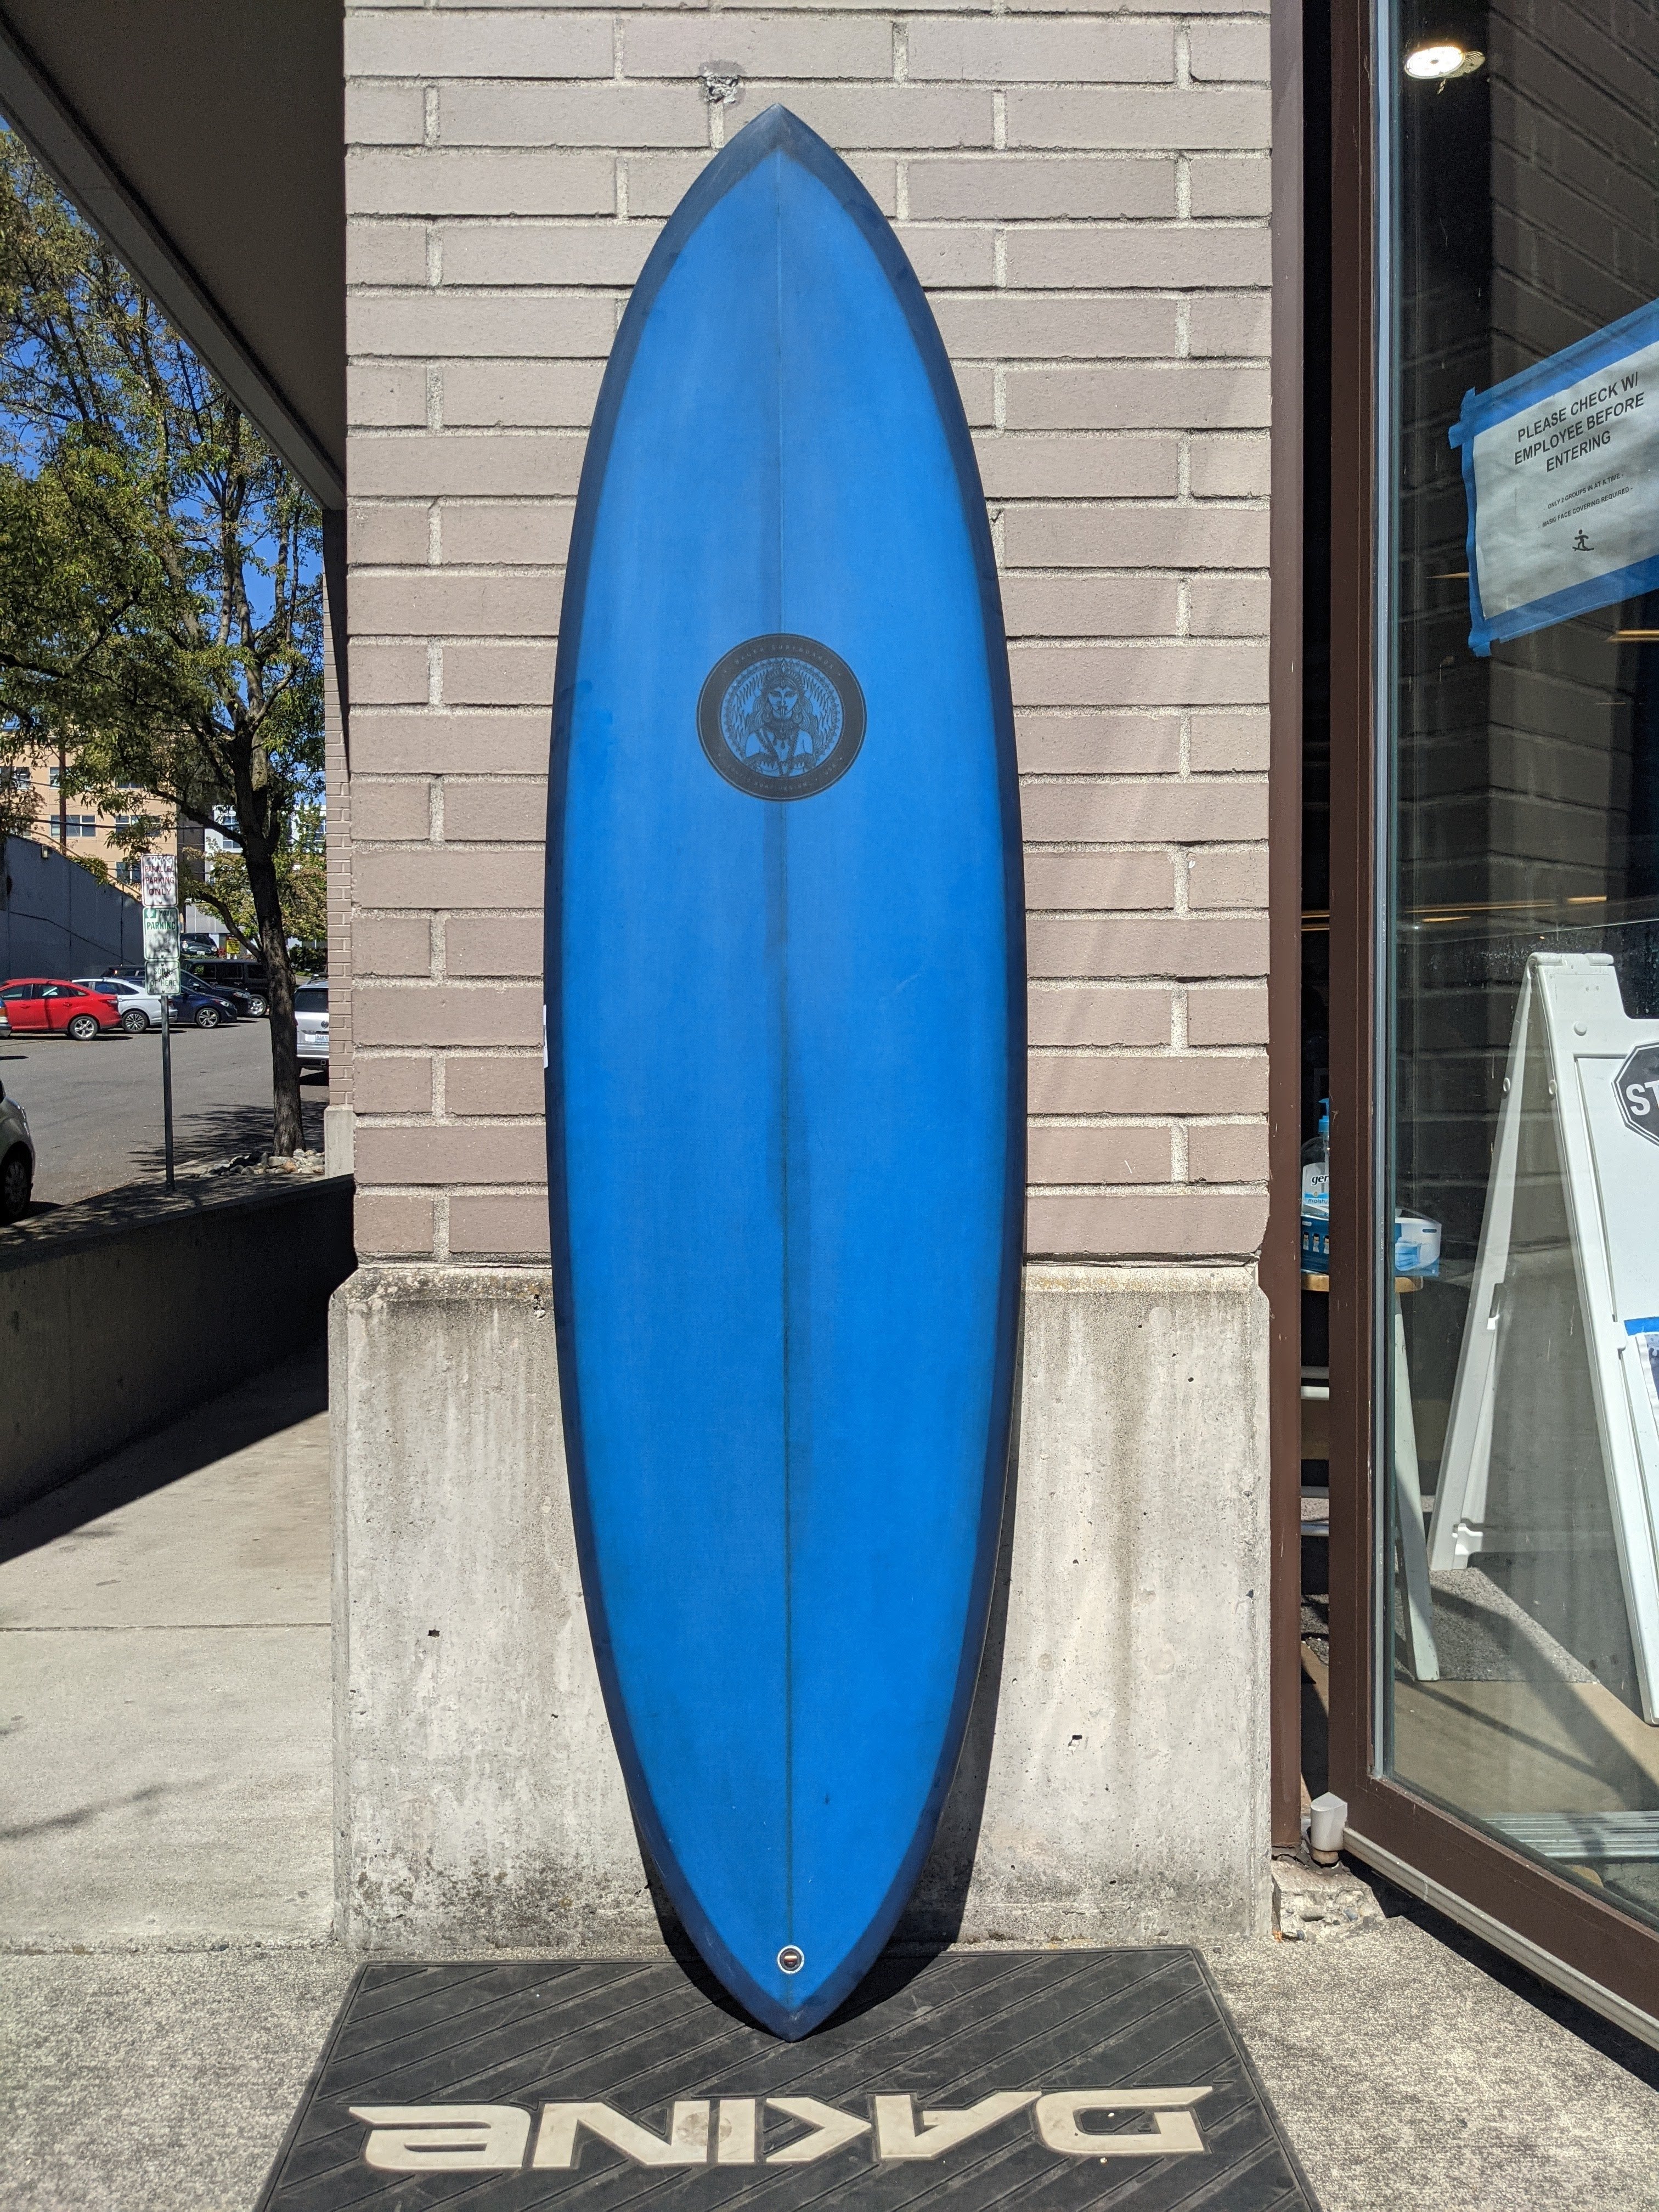 Bauer Surfboards 6'6" Channeled Twin